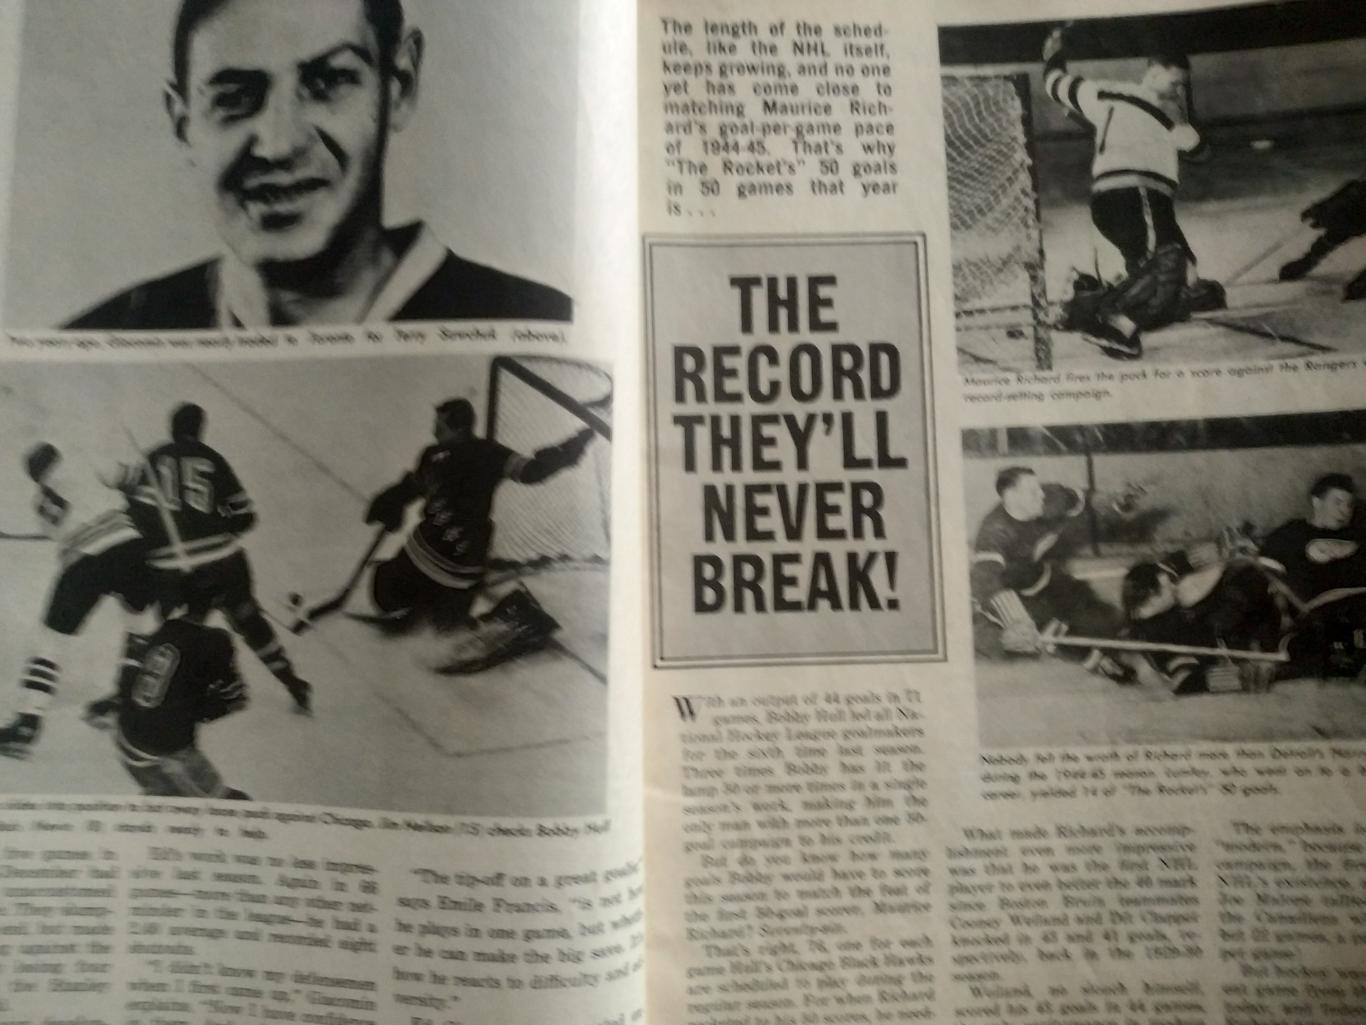 ЖУРНАЛ НХЛ СПОРТ СПЕШИАЛ ХОККЕЙ FEB 1969 NHL SPORTS SPECIAL HOCKEY 2